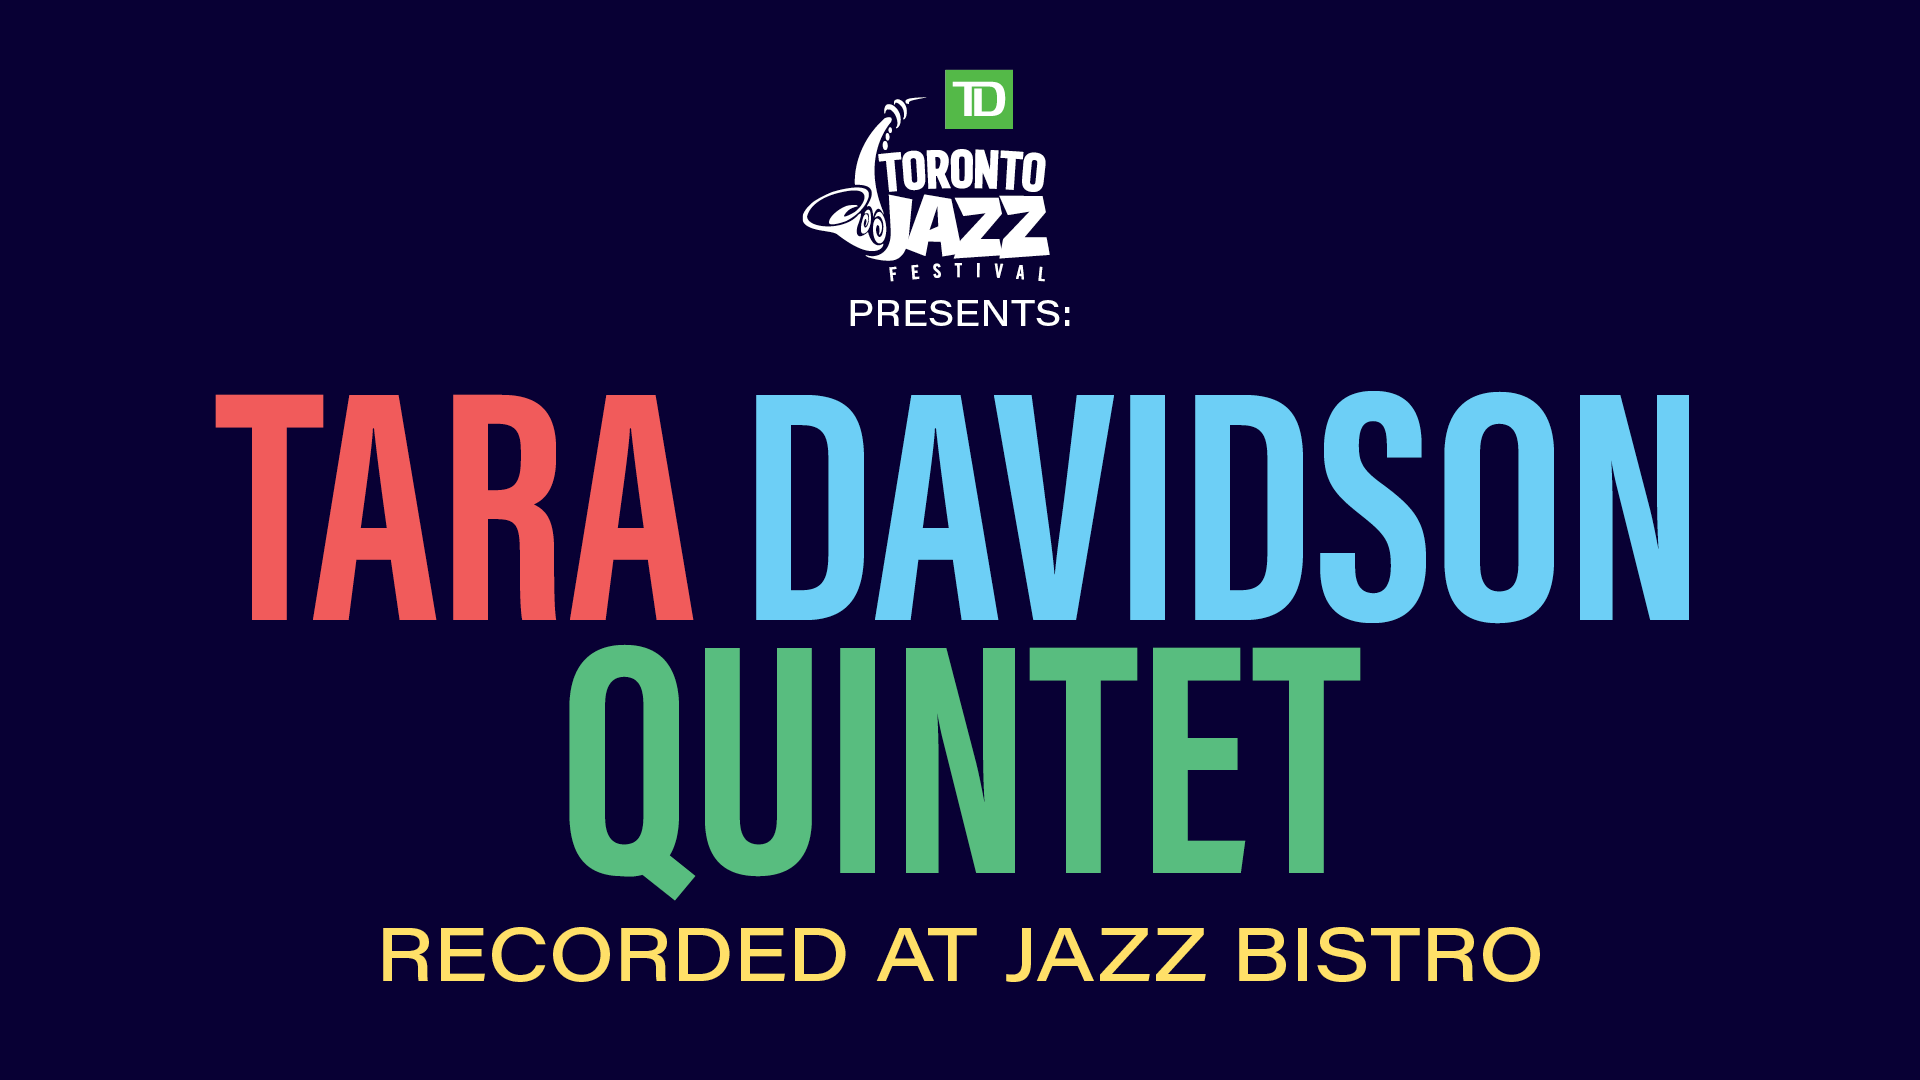 TD Toronto Jazz Festival presents… City of Culture: Tara Davidson Quintet